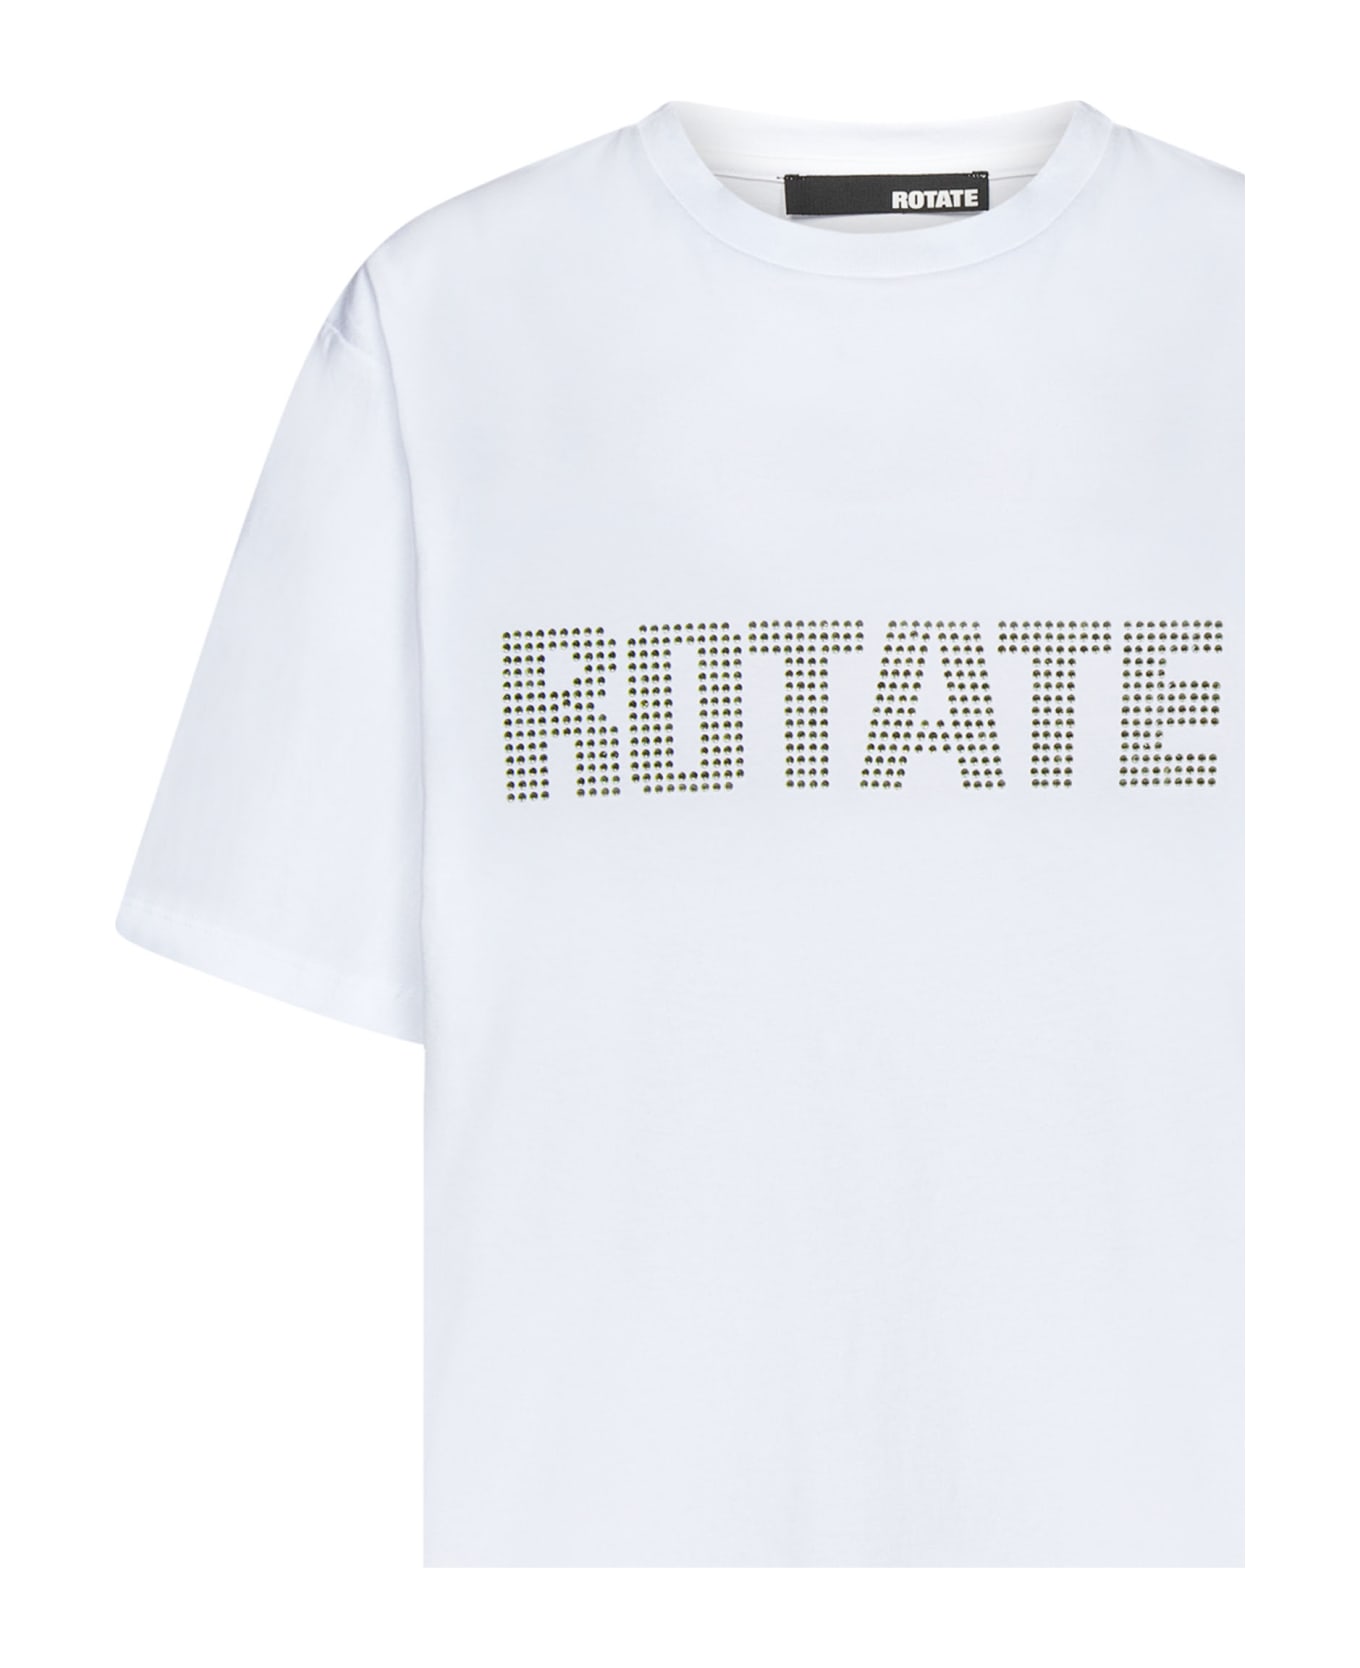 Rotate by Birger Christensen Rotate T-shirt - BIANCO